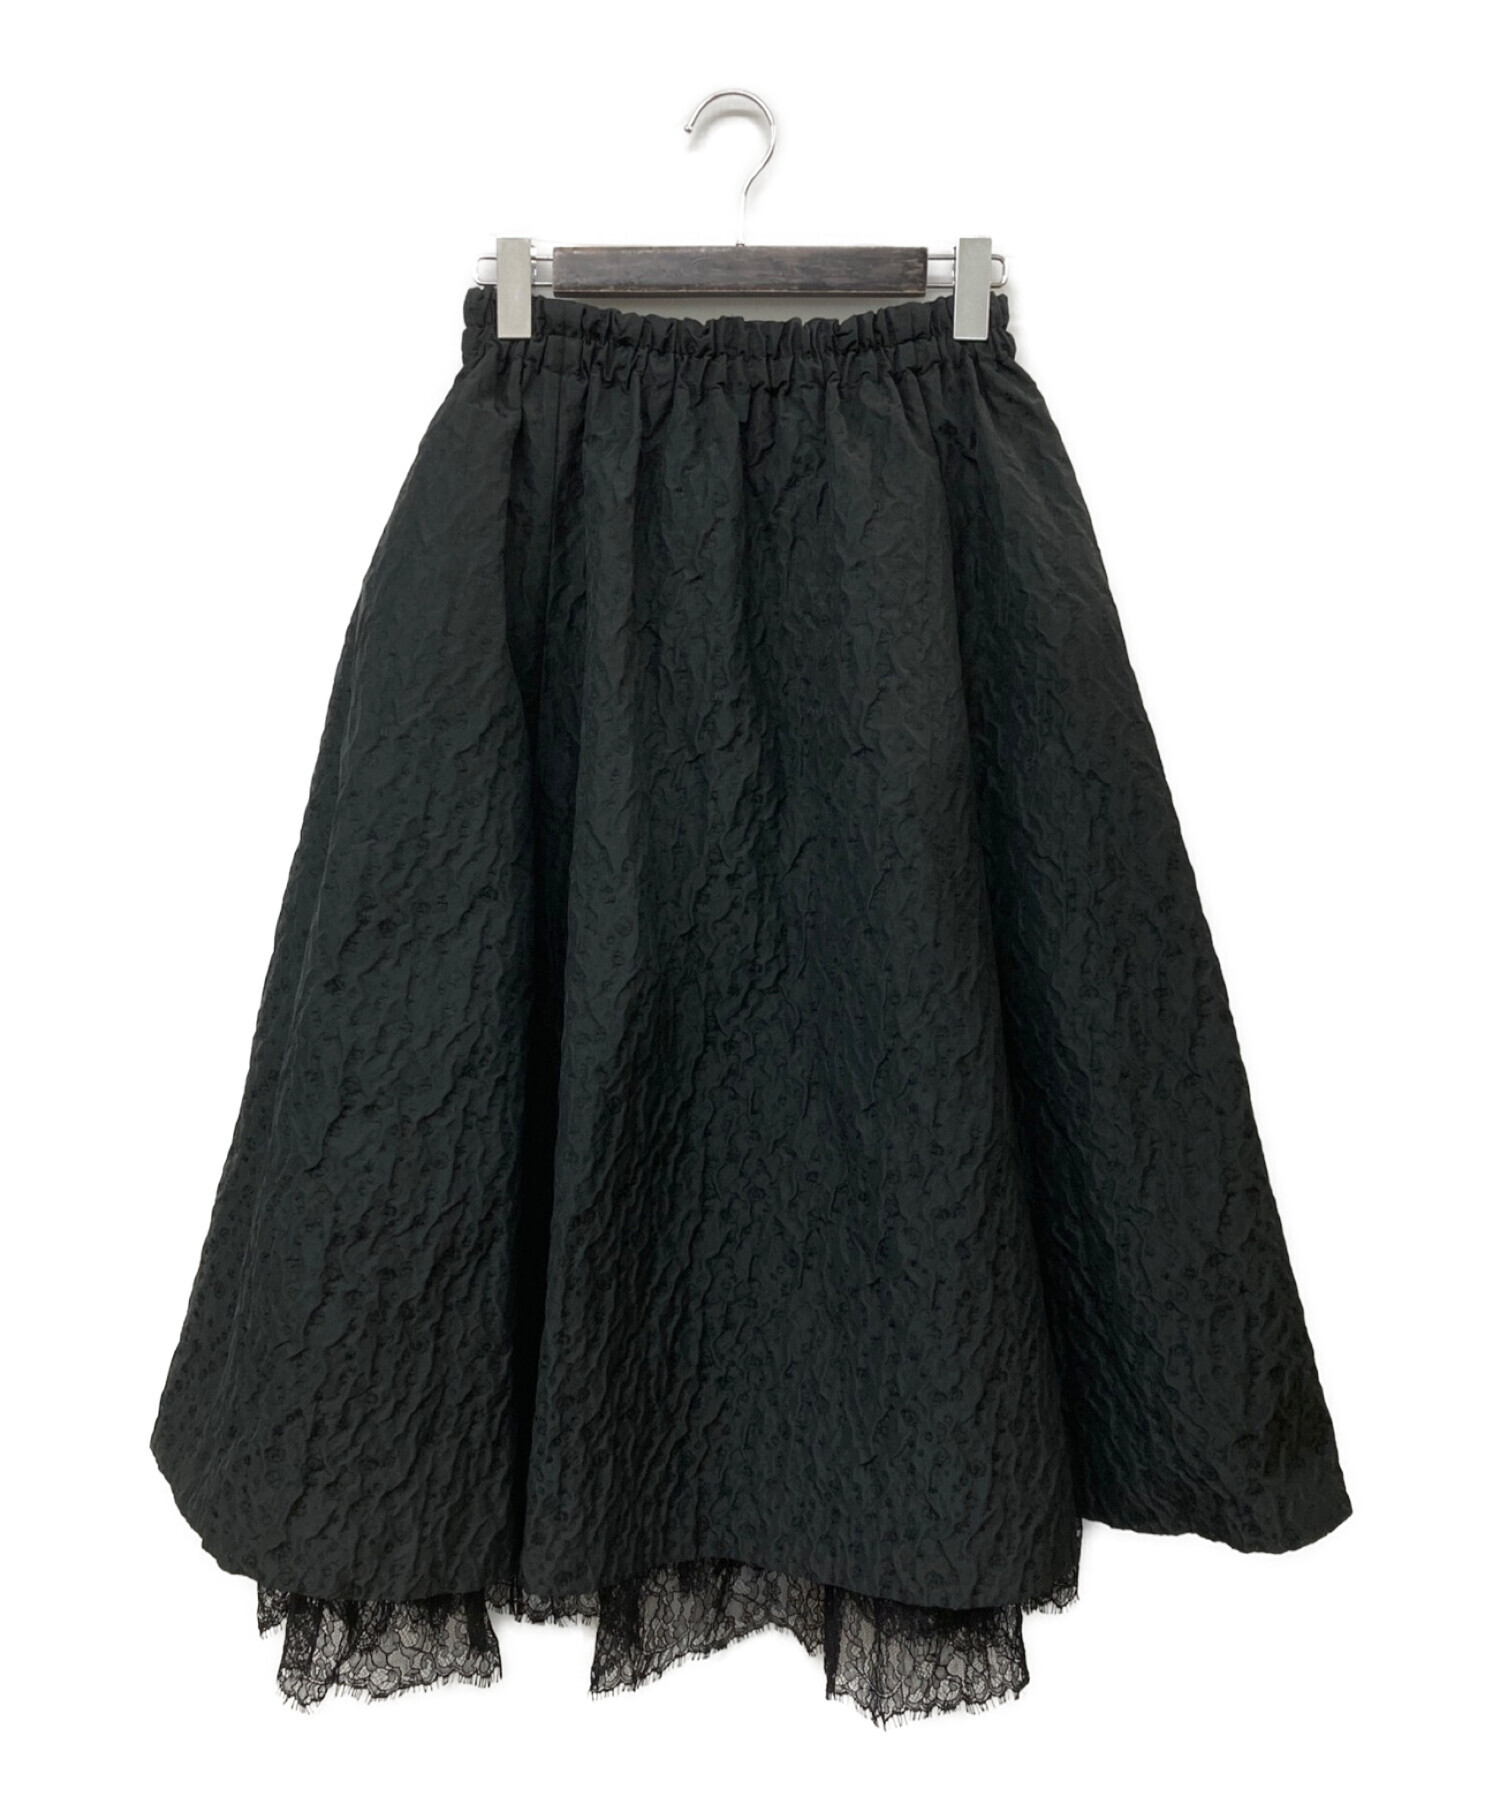 UNITED ARROWS レーススカート 黒 36 - スカート